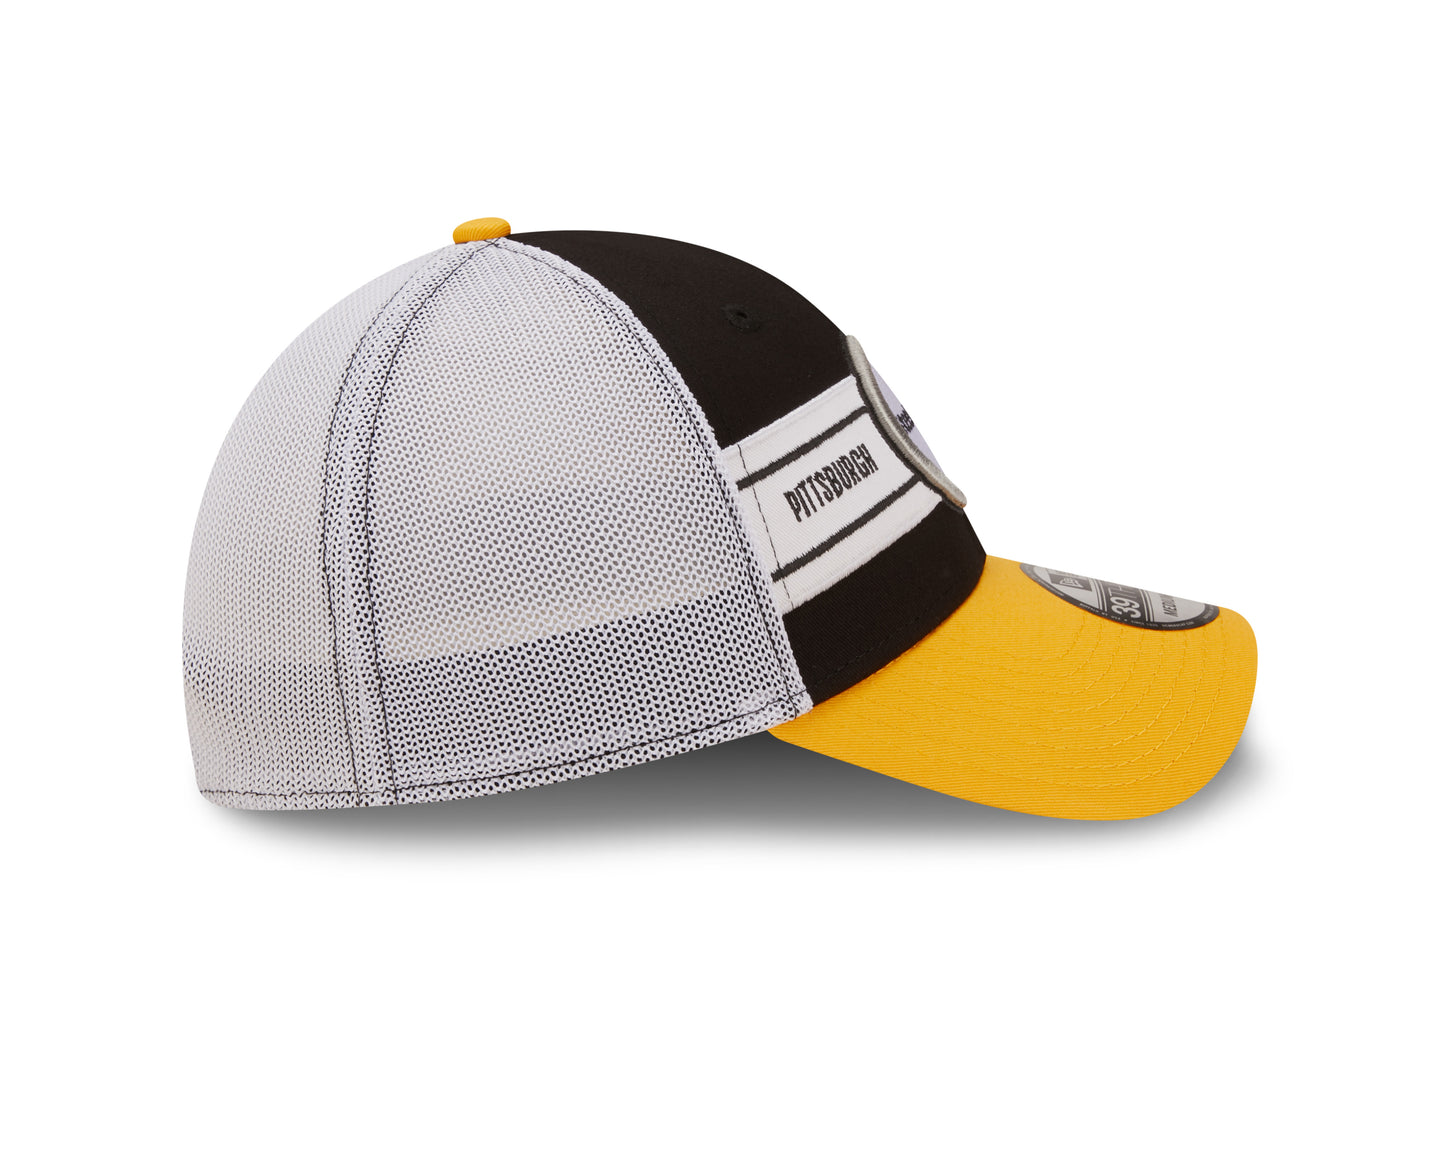 Pittsburgh Steelers New Era Team Branded 39Thirty Mesh Hat